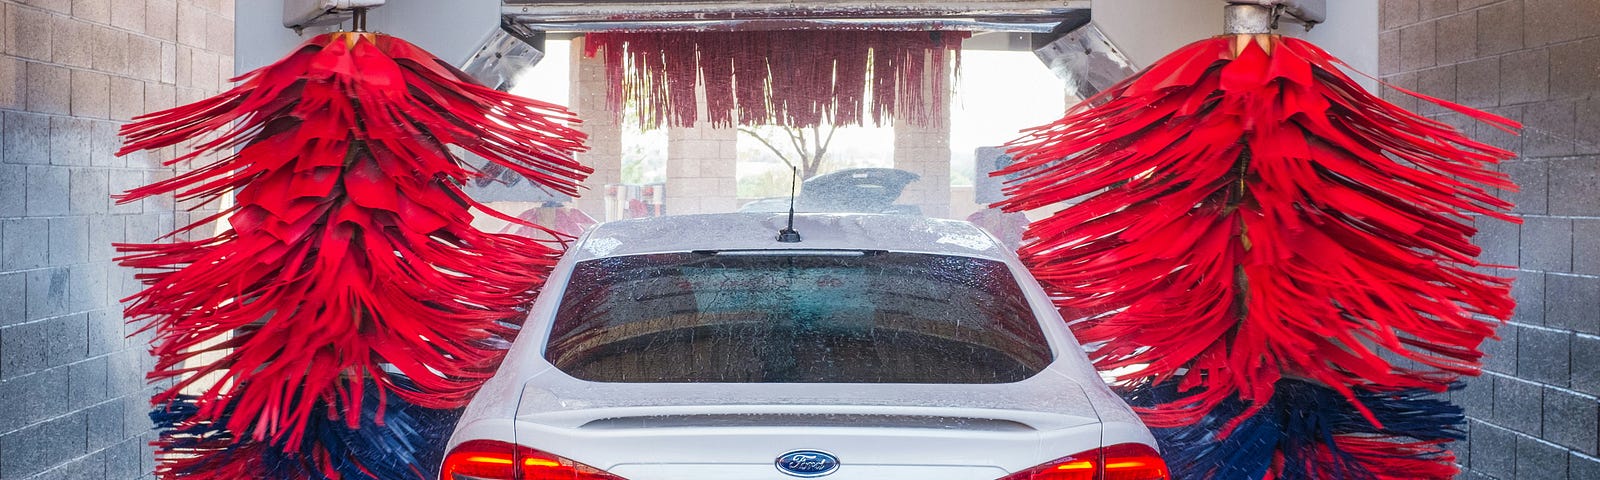 Automated car wash